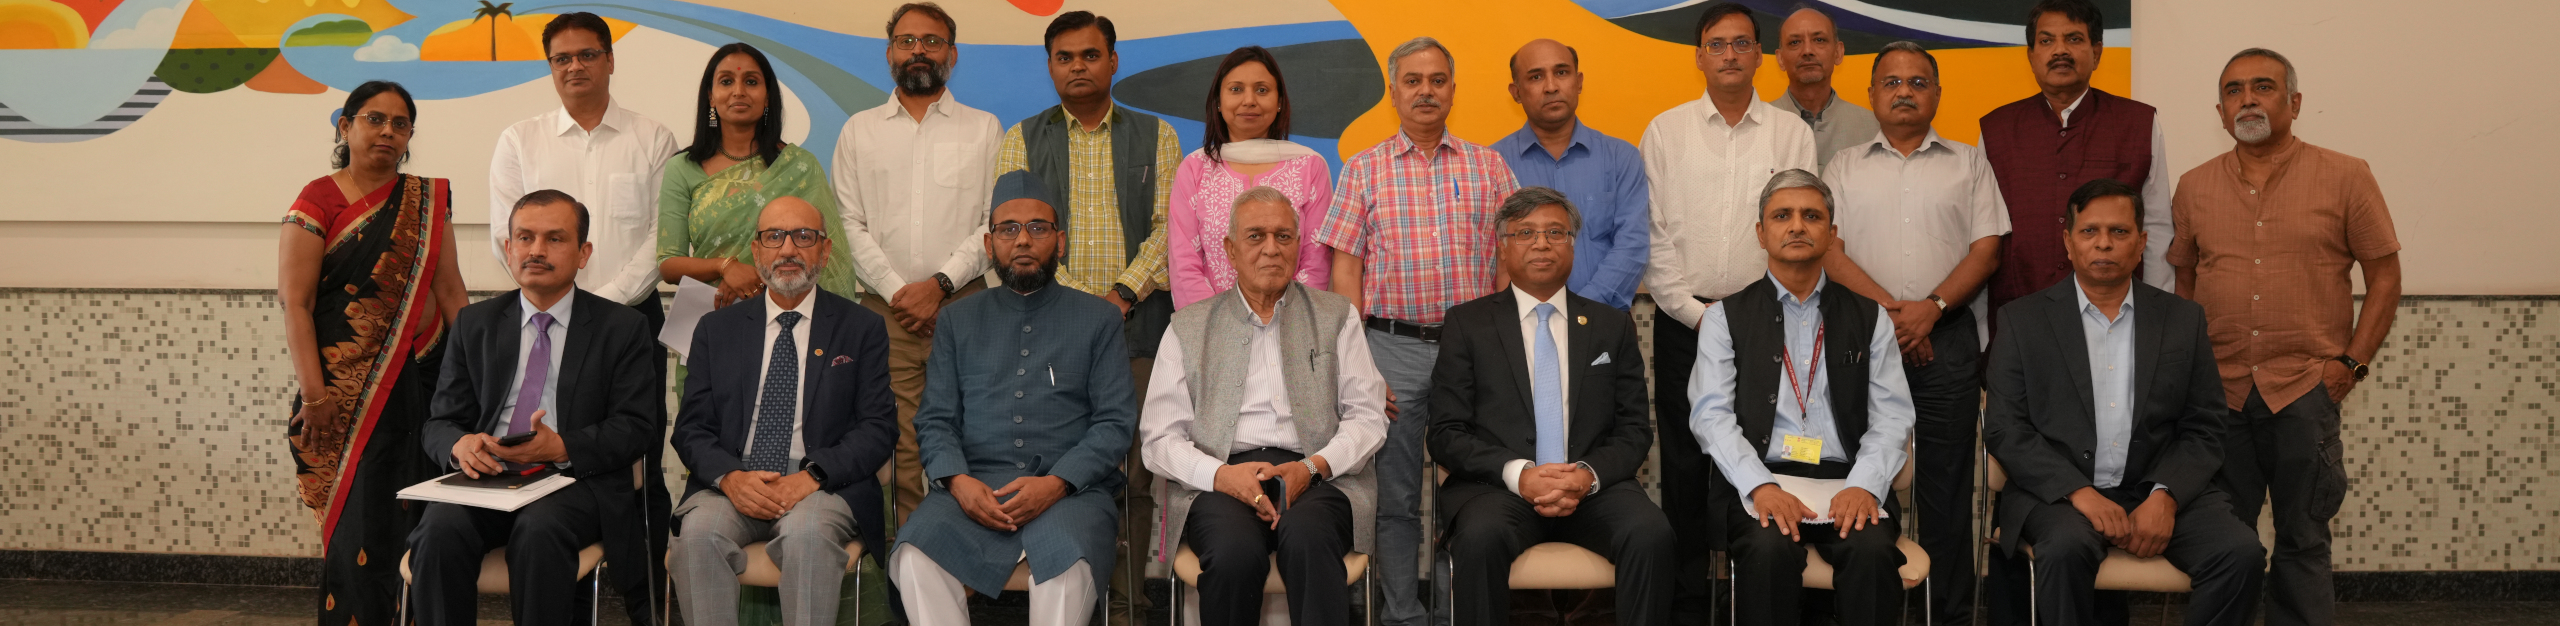 Secretary General's visit to South Asian University